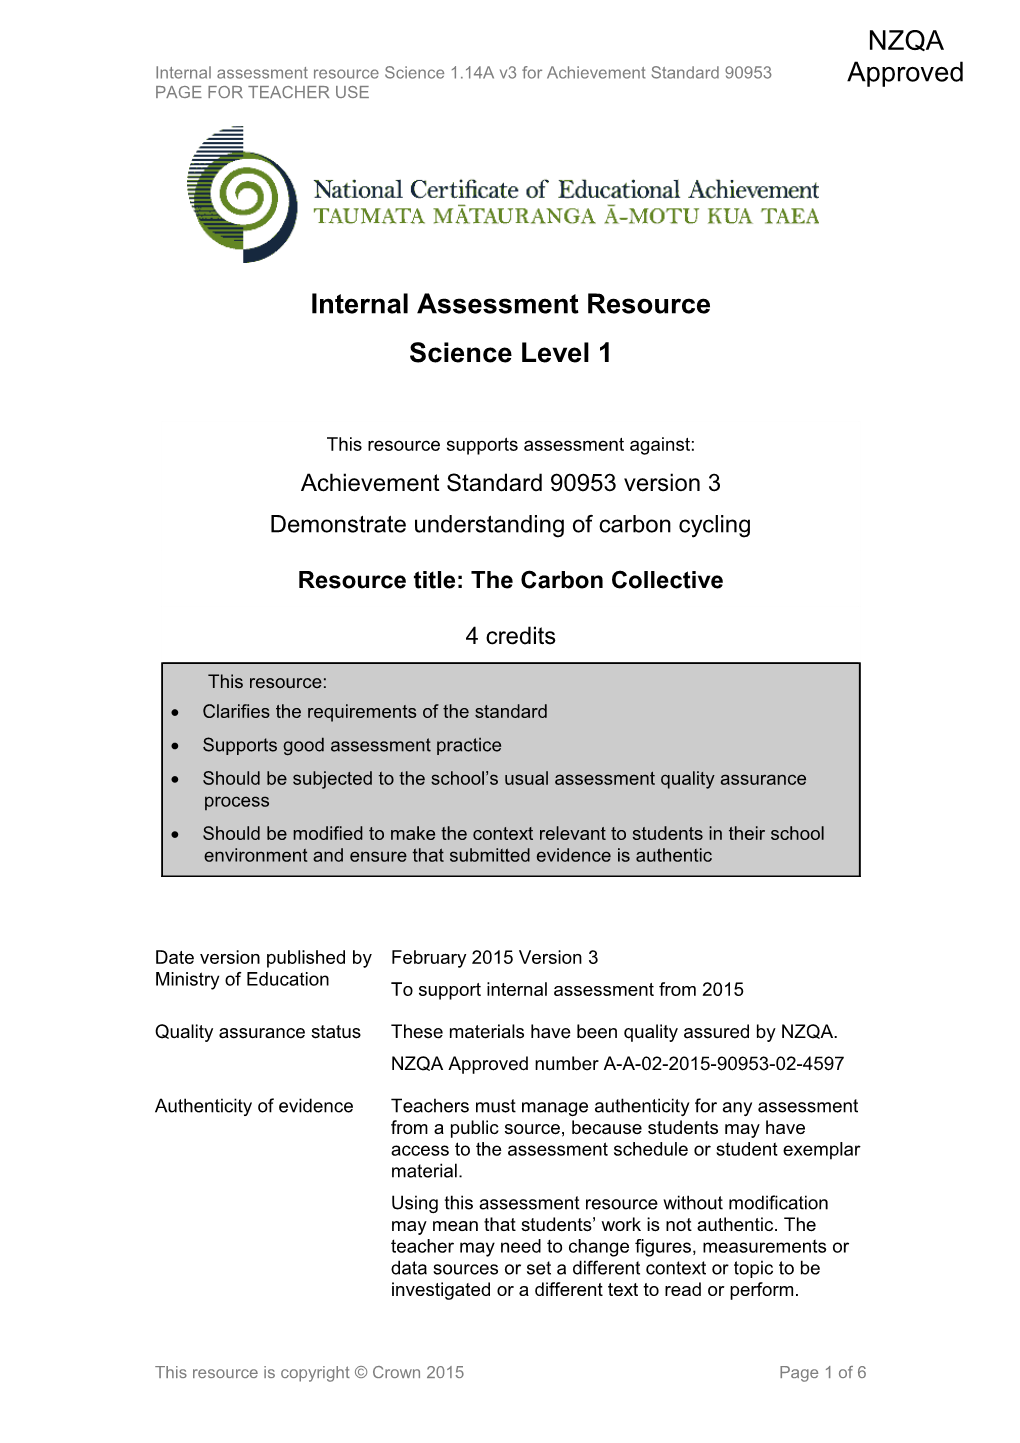 Level 1 Science Internal Assessment Resource